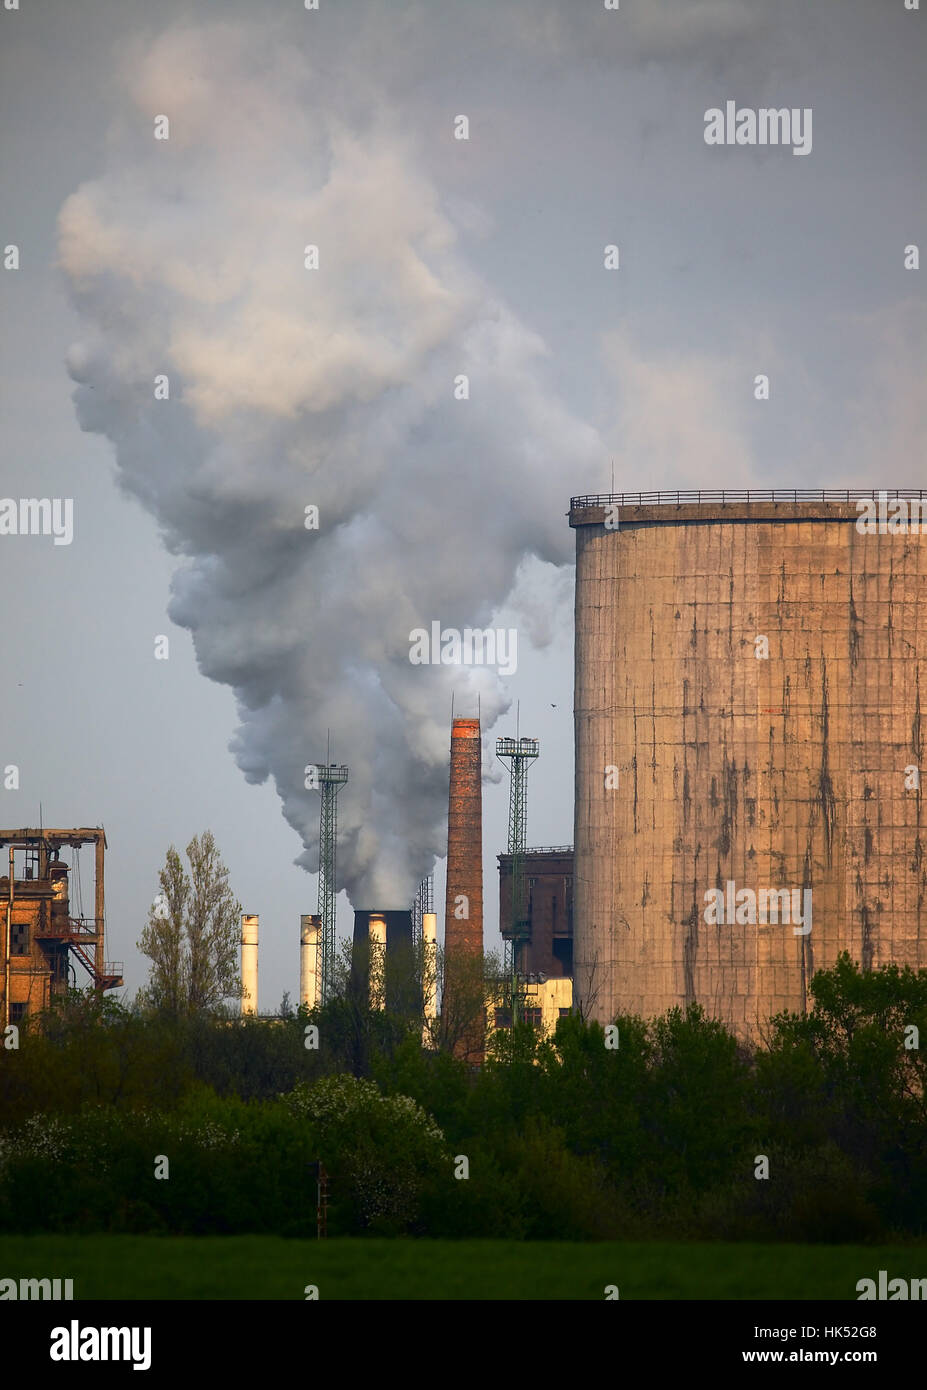 Industrial plant emitting smoke Stock Photo